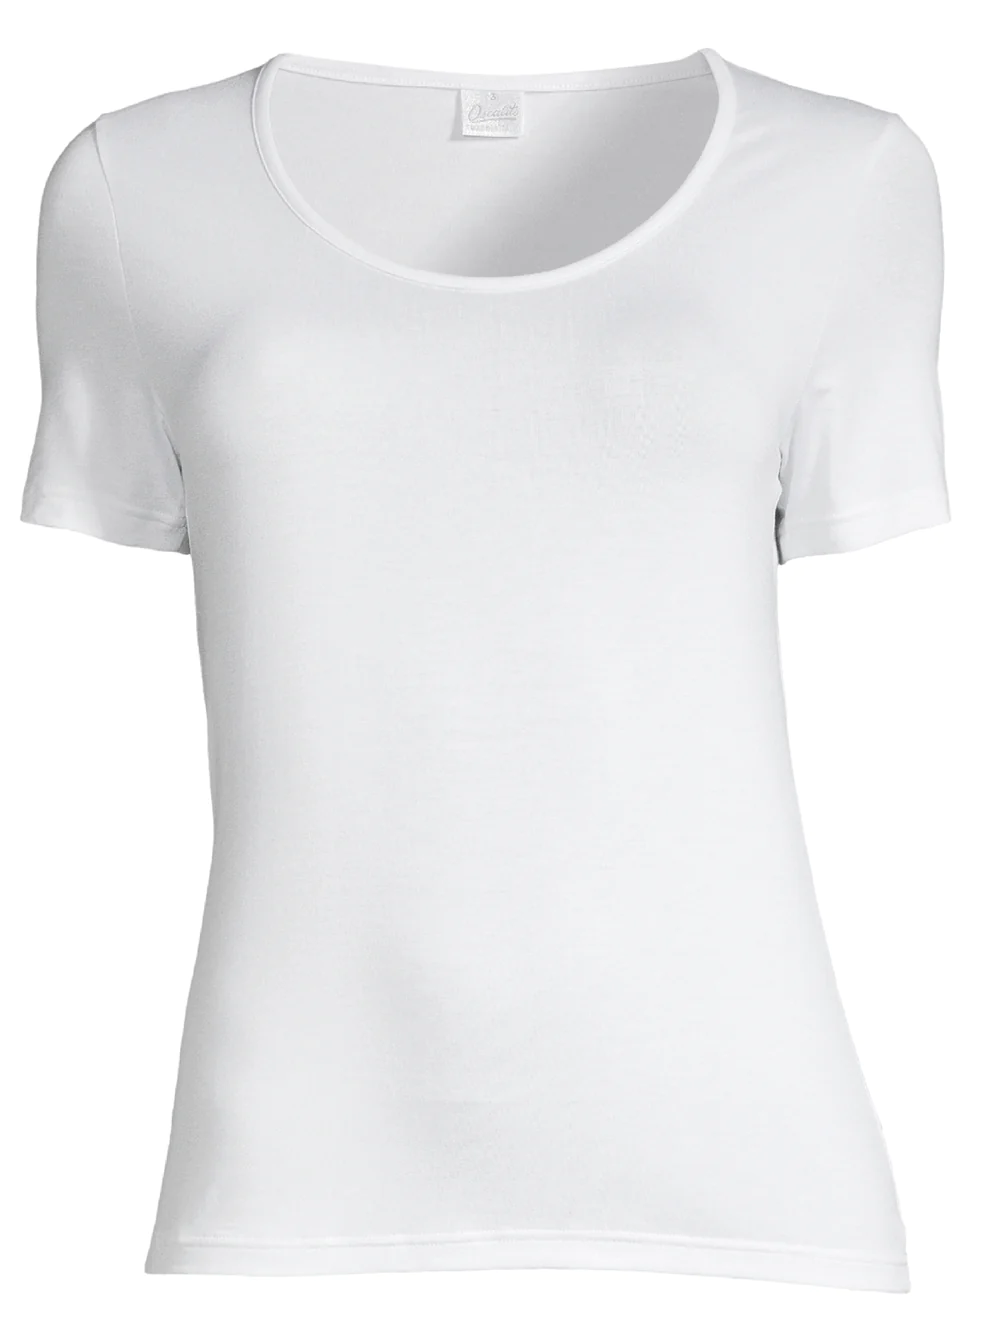 Oscalito Ultralight Micromodal T-Shirt